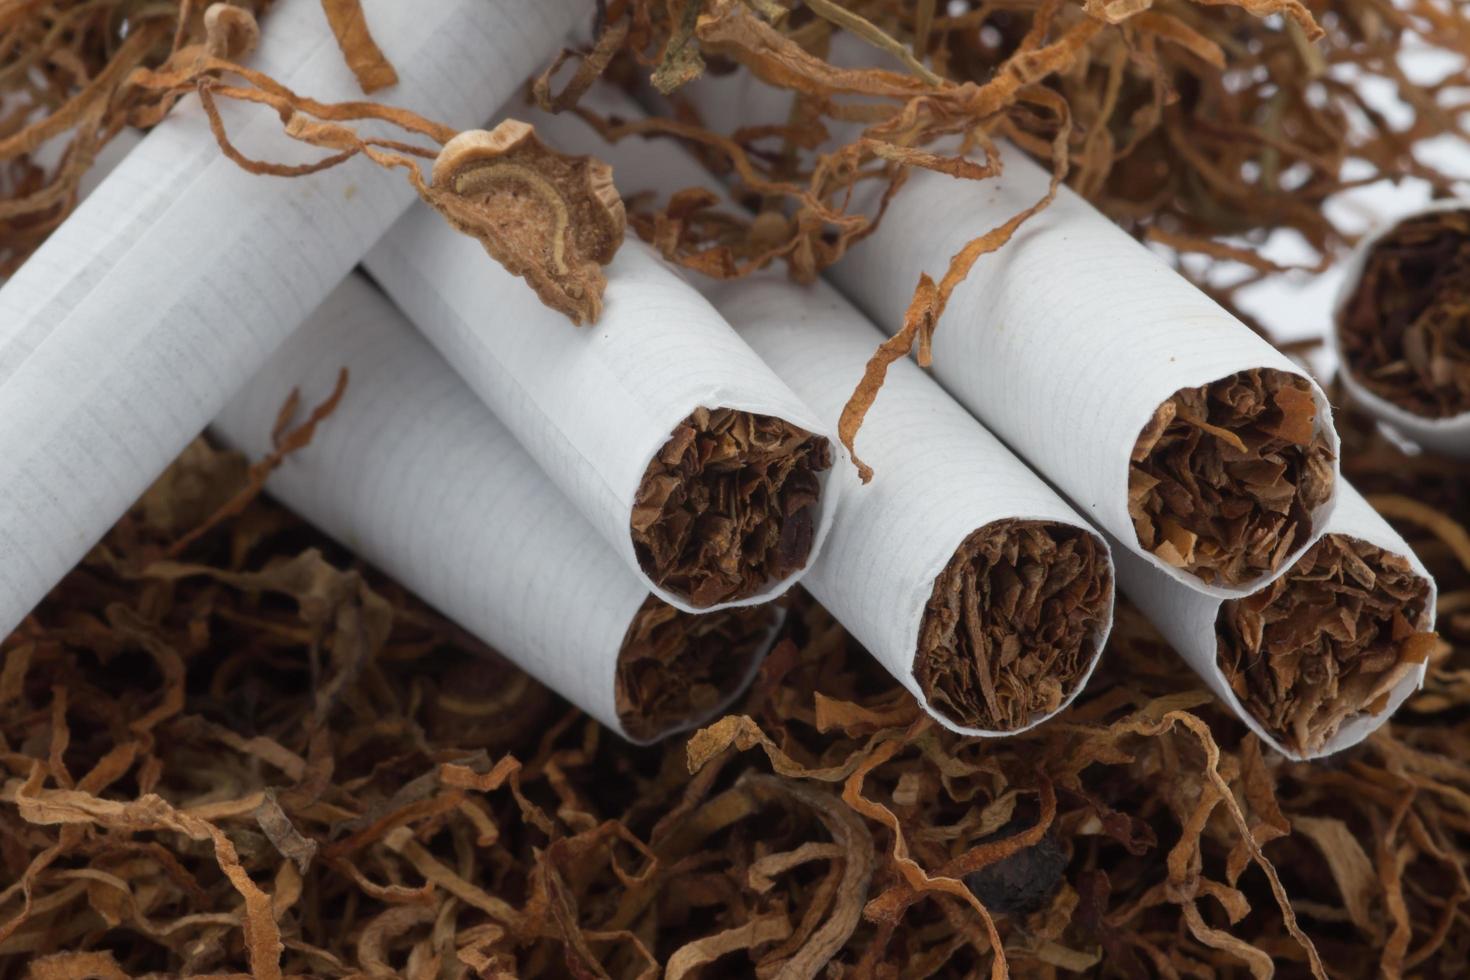 Tobacco pile and cigarettes photo